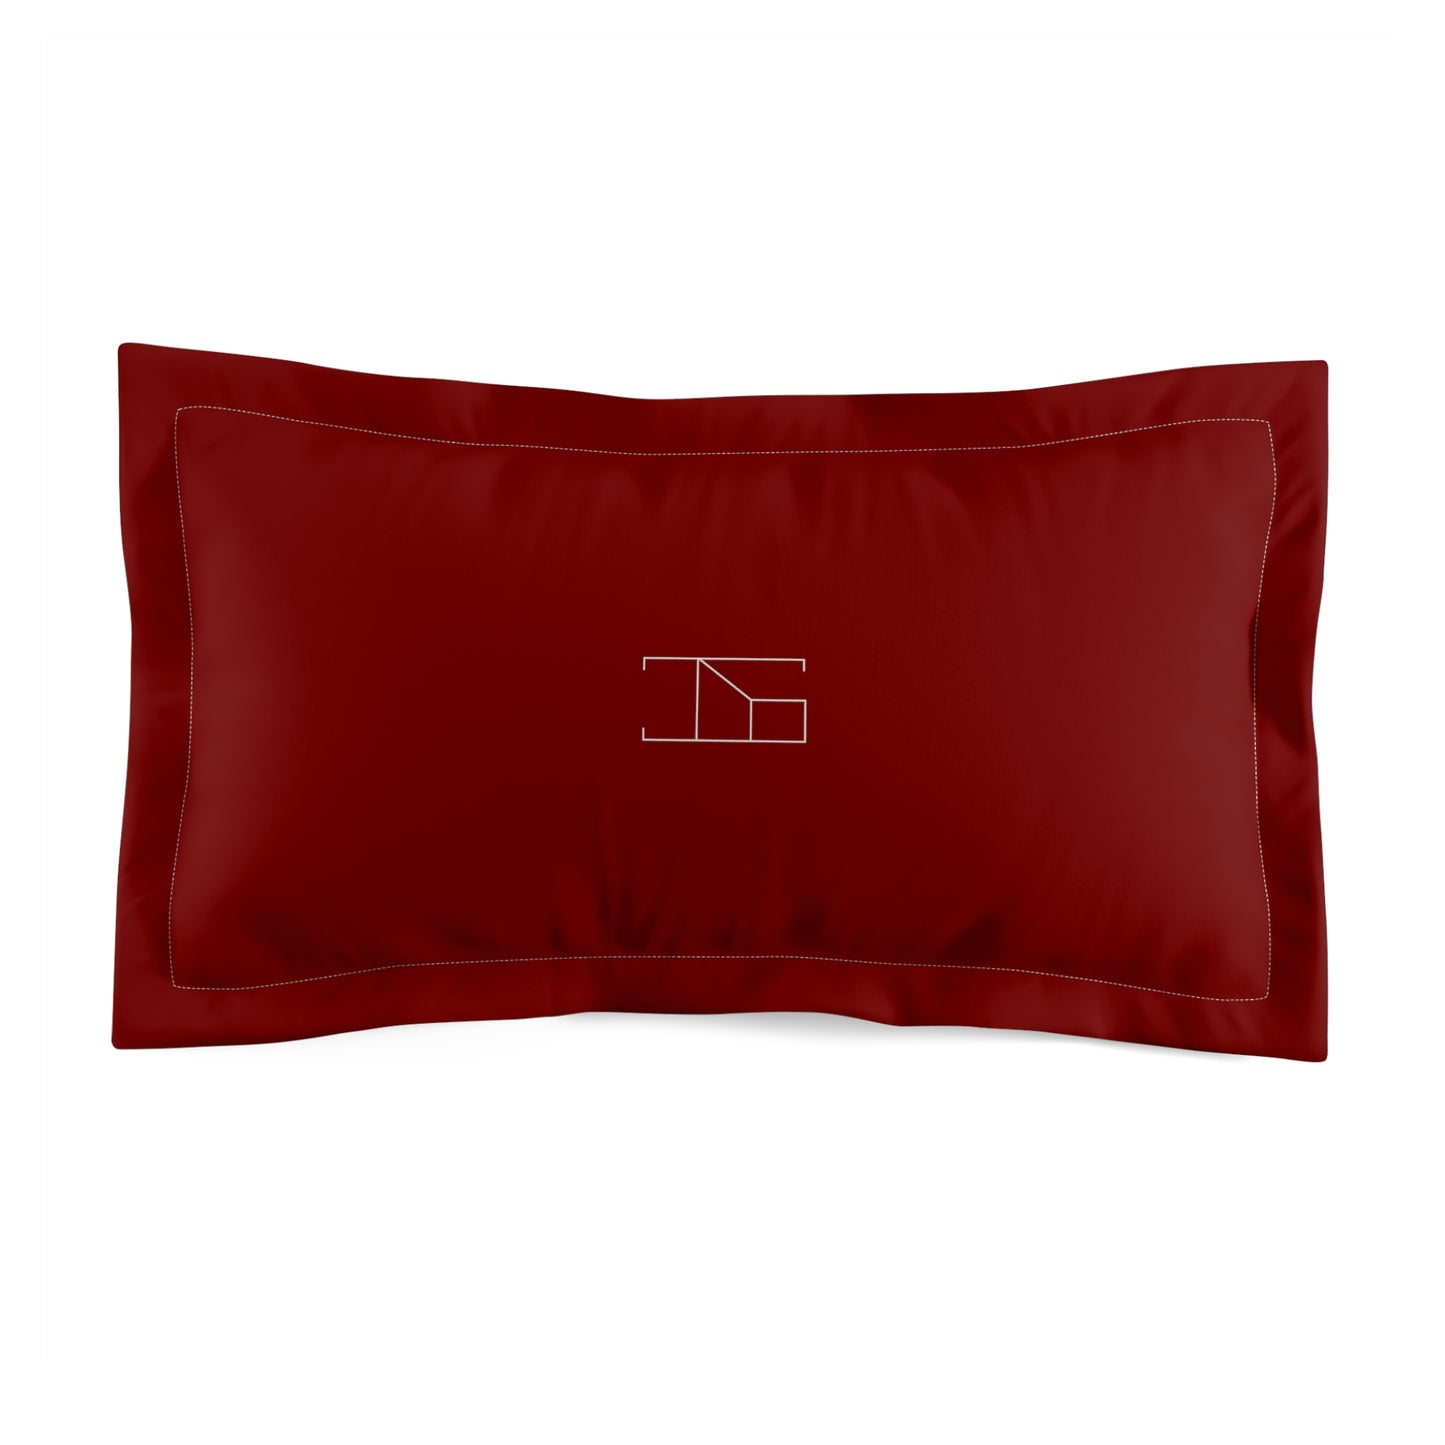 Pillow Sham - Barn Red 28